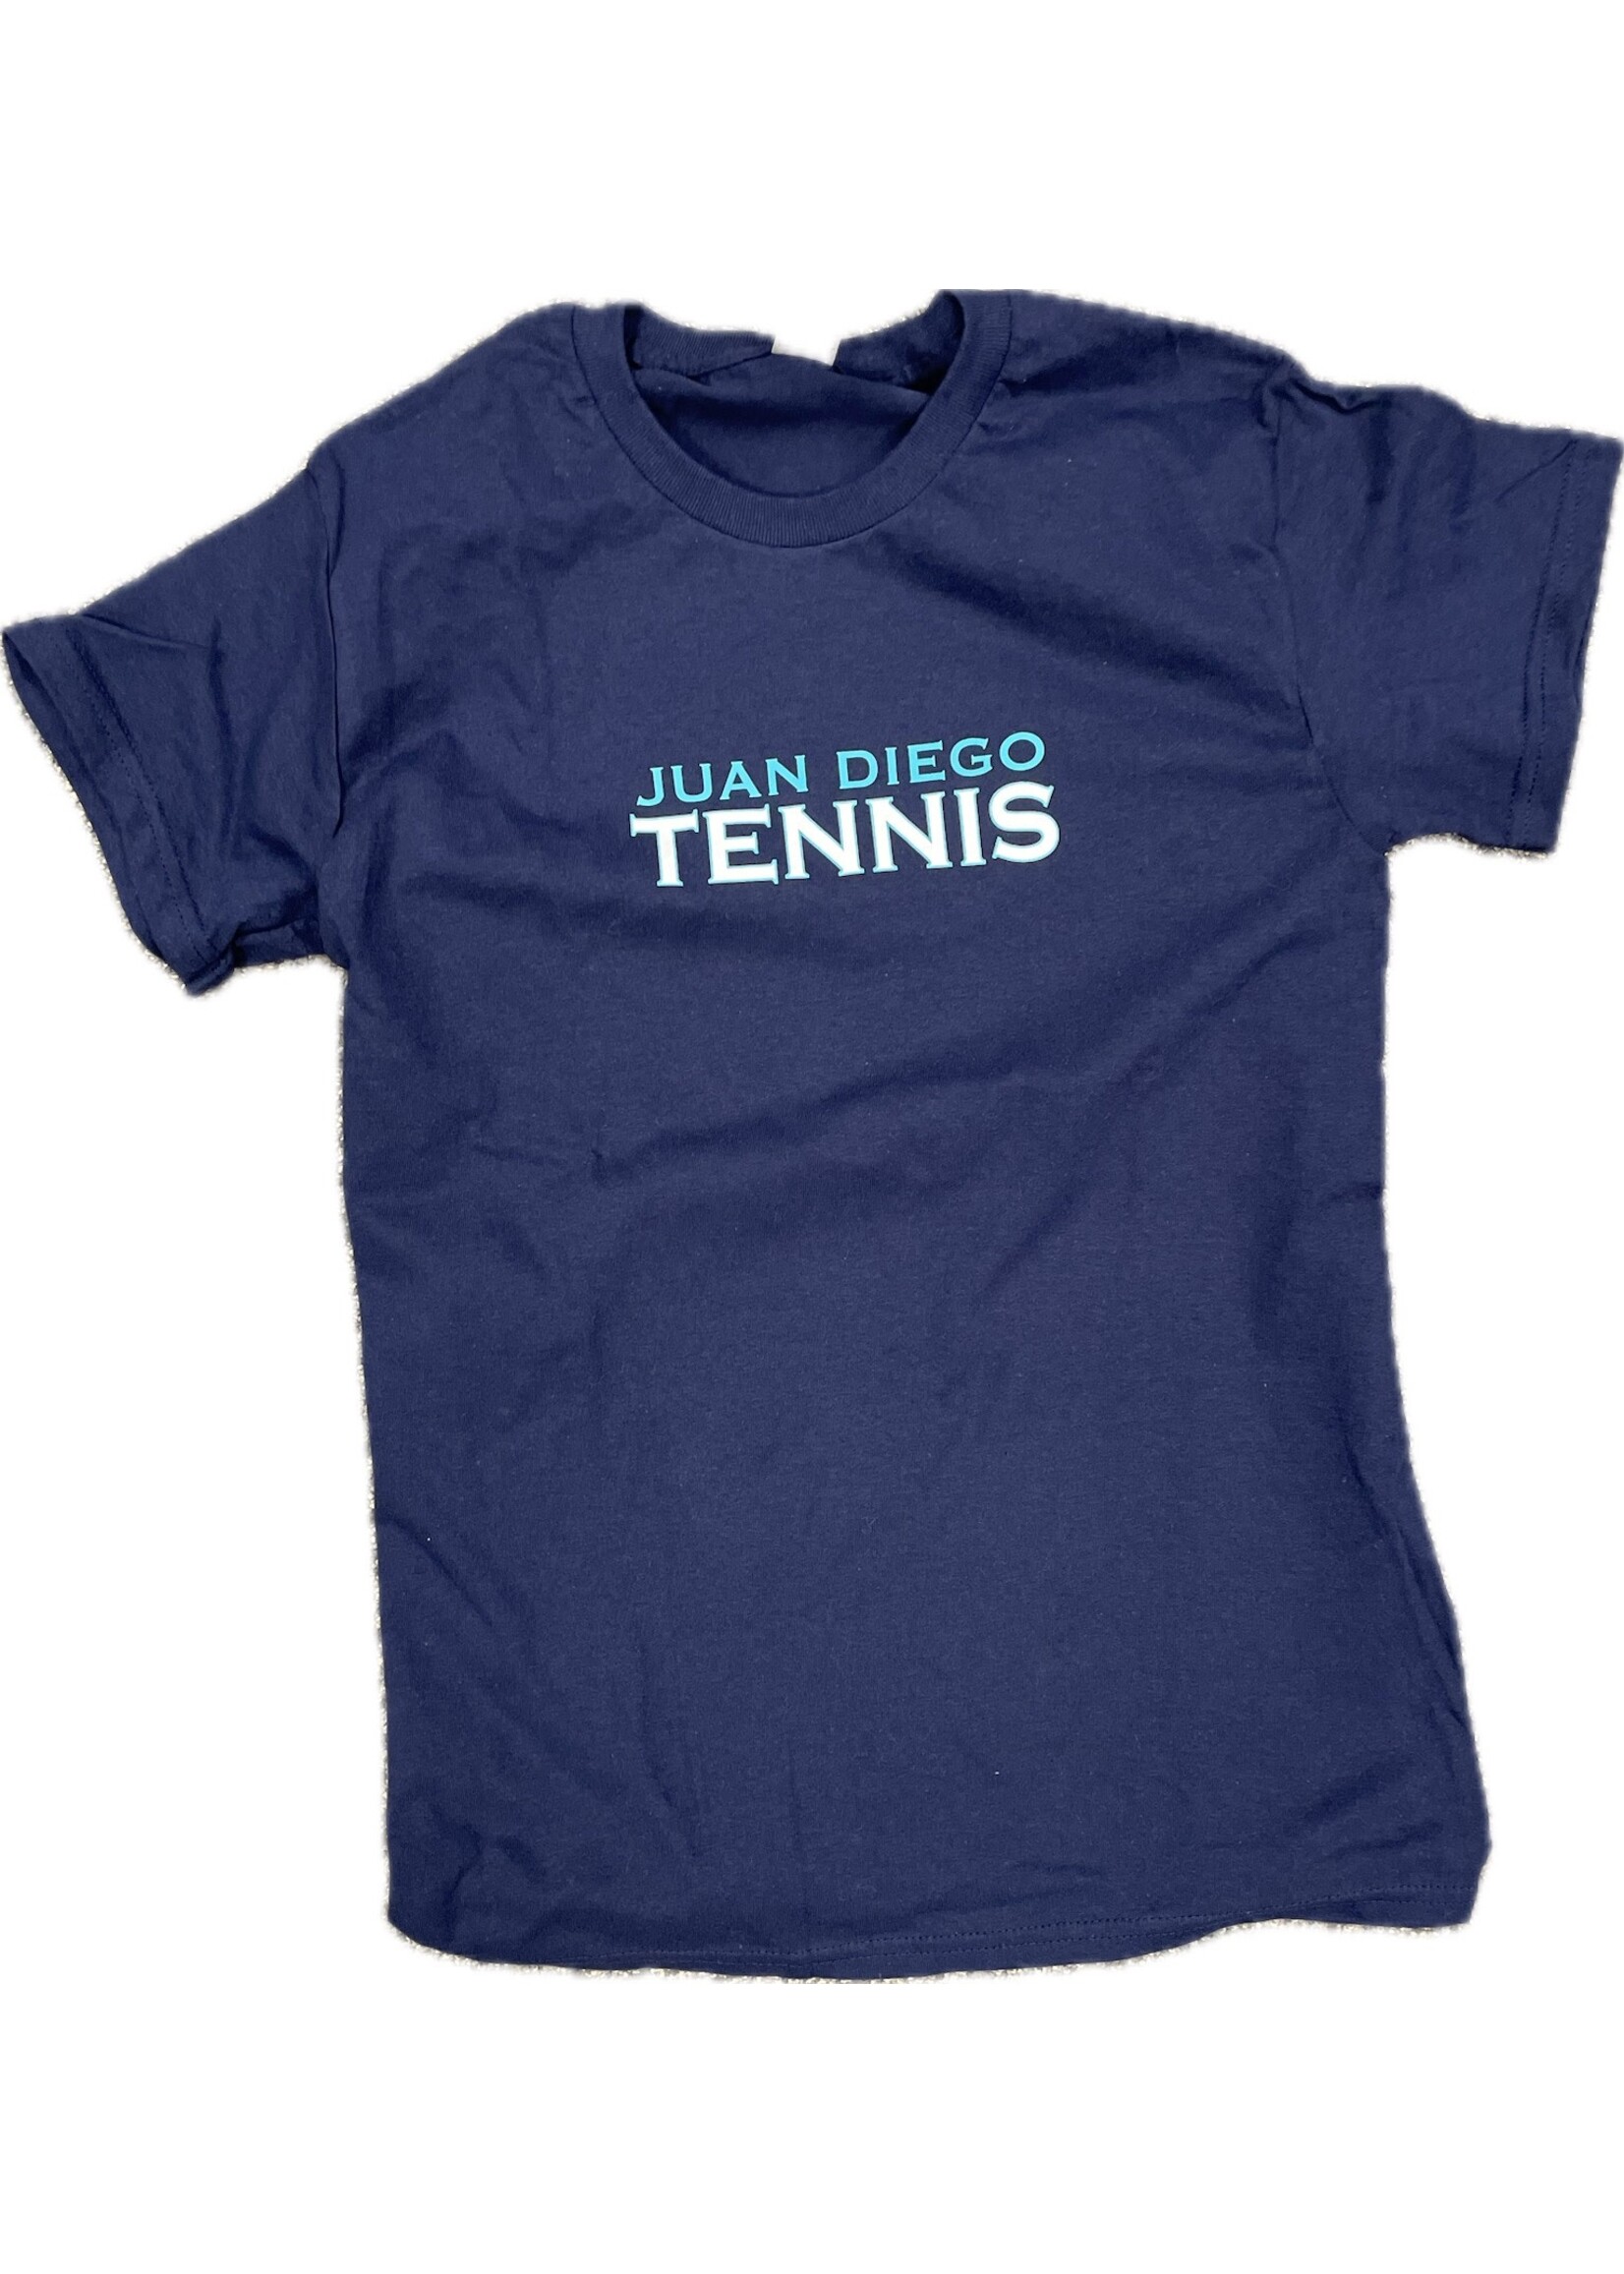 NON-UNIFORM Tennis, Juan Diego Tennis Custom Order Unisex s/s t-shirt